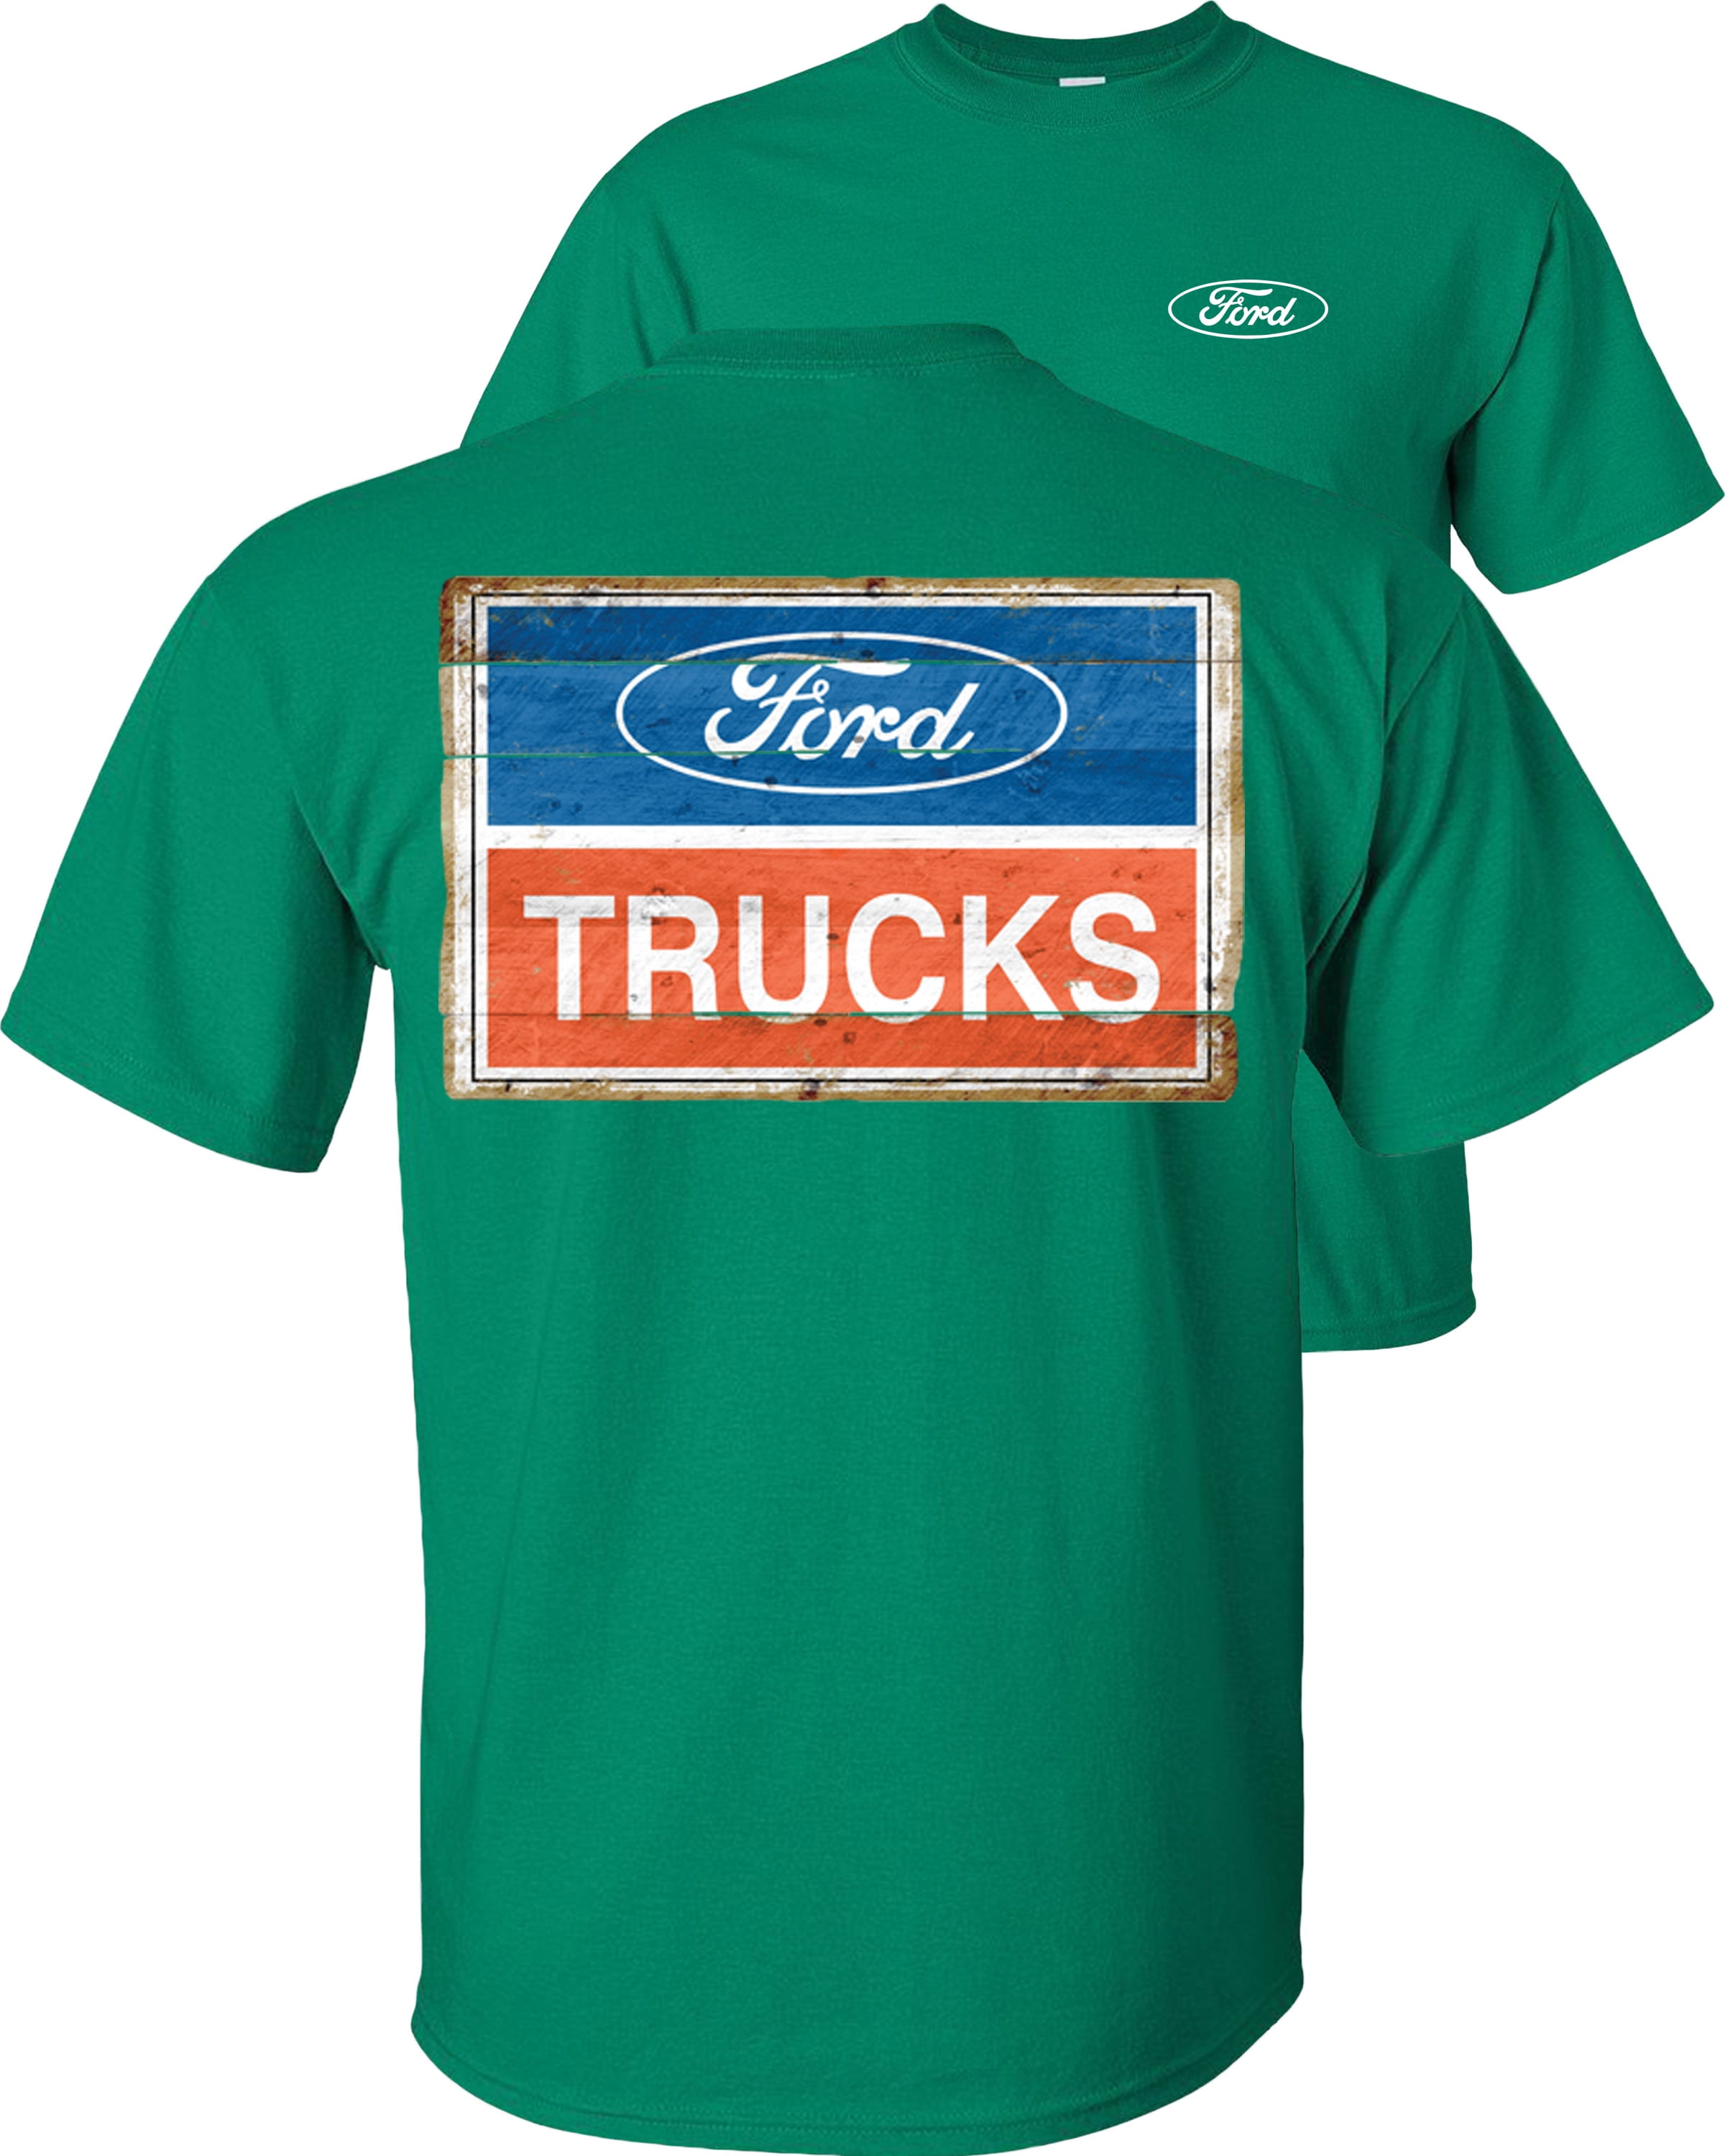 Fio Turbo Tee x 3 Truck Design T-Shirt